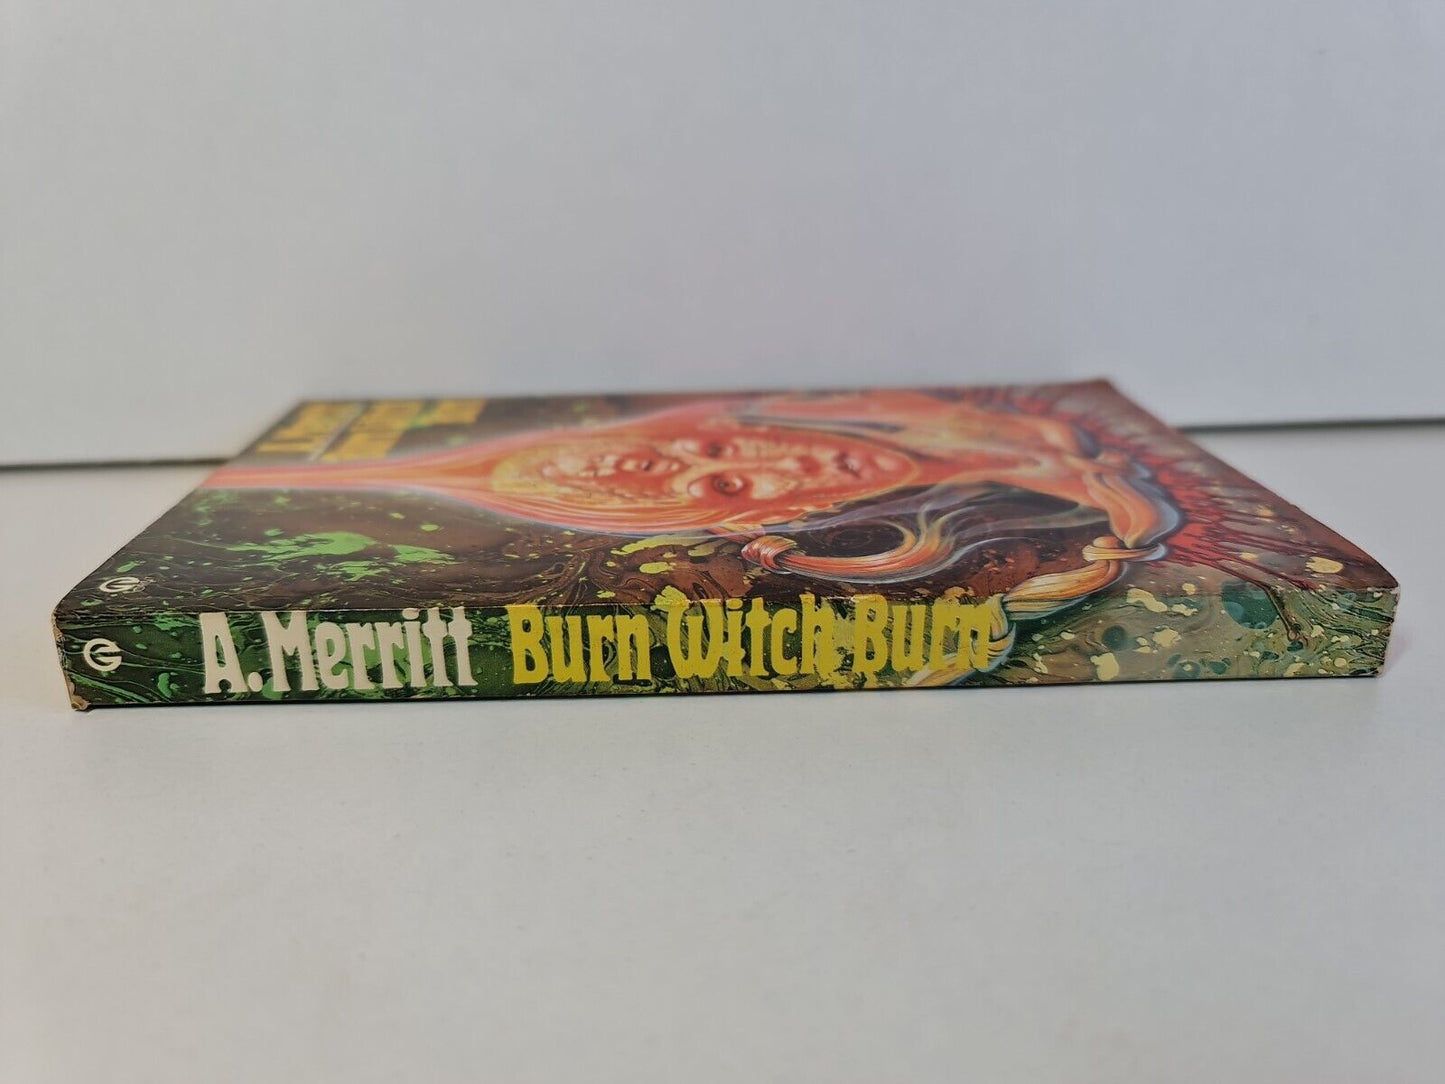 Burn Witch Burn! by Abraham Merritt (1974)